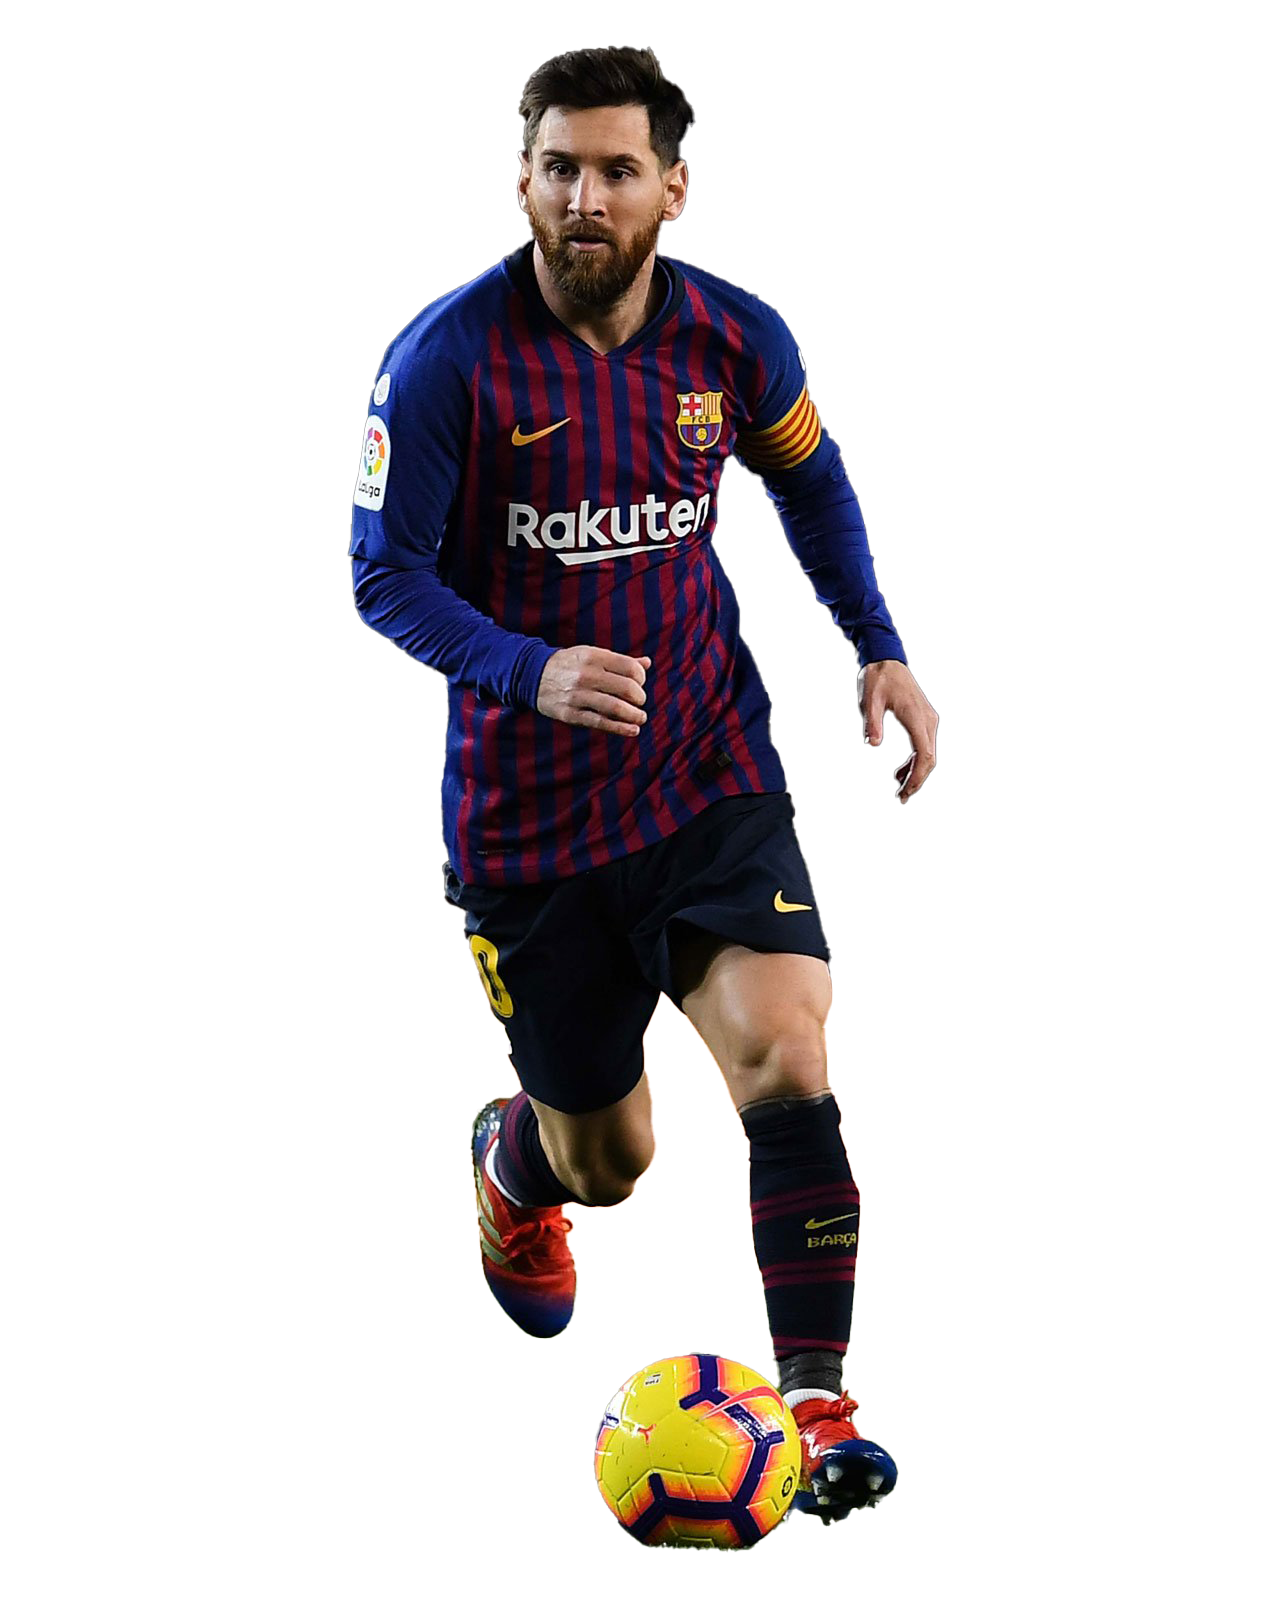 FC Barcelona Lionel Messi PNG File Download Free